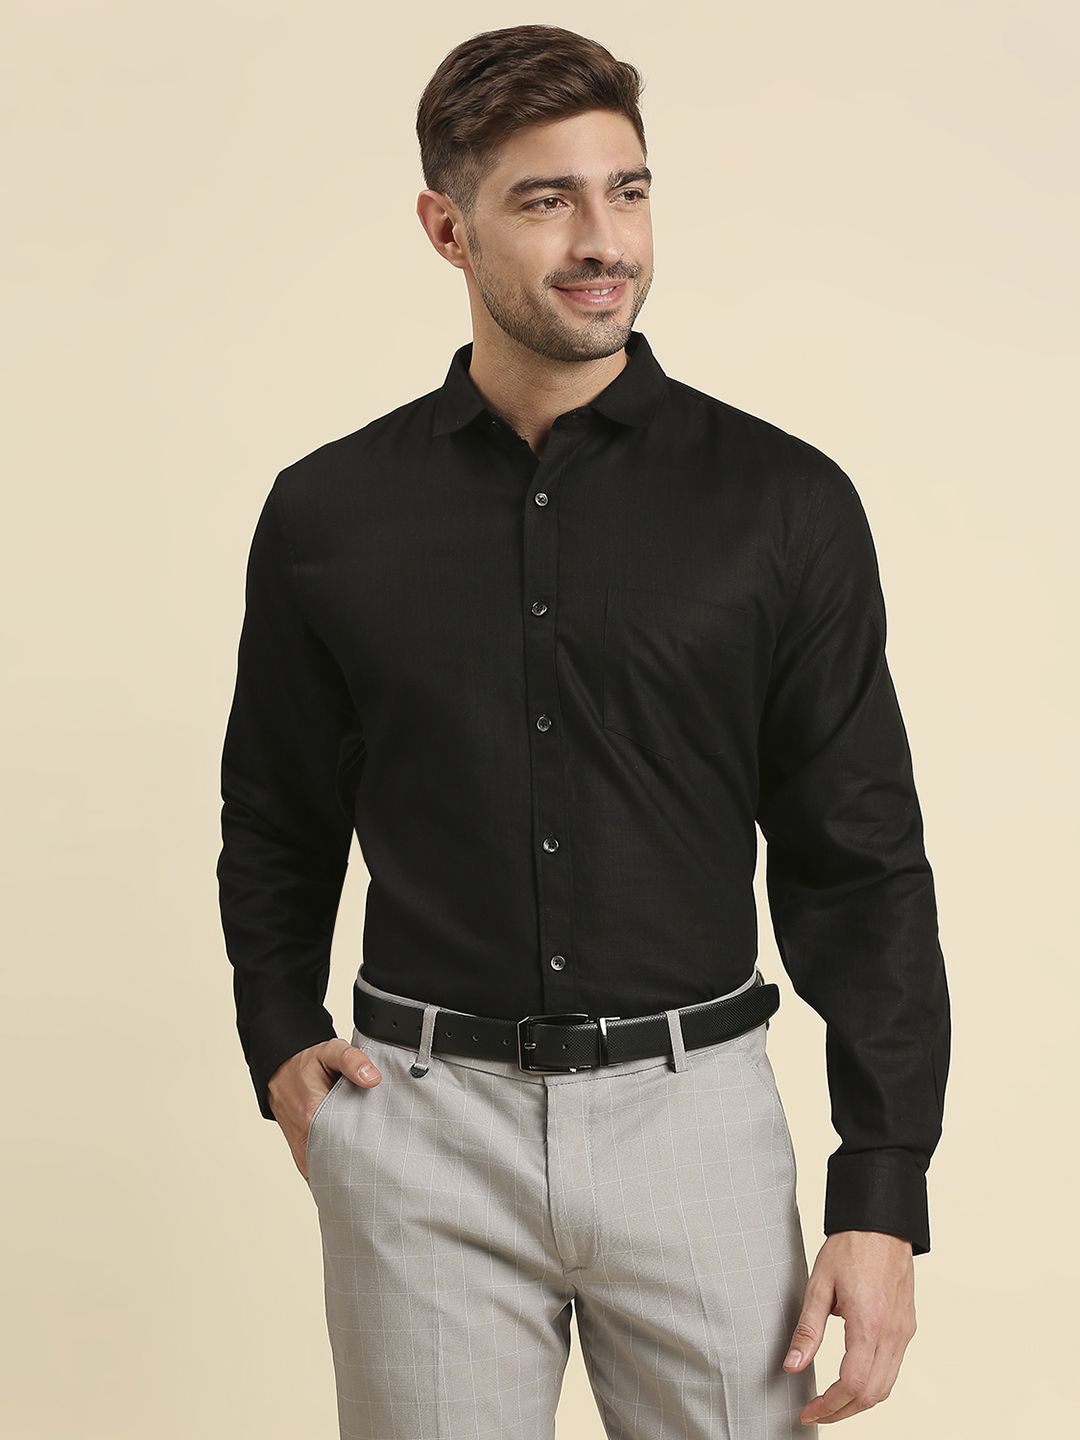 Buy Black Formal Shirt for Men Online in India  JAPs Premium Urbanwear  Color Black SizeShirt S